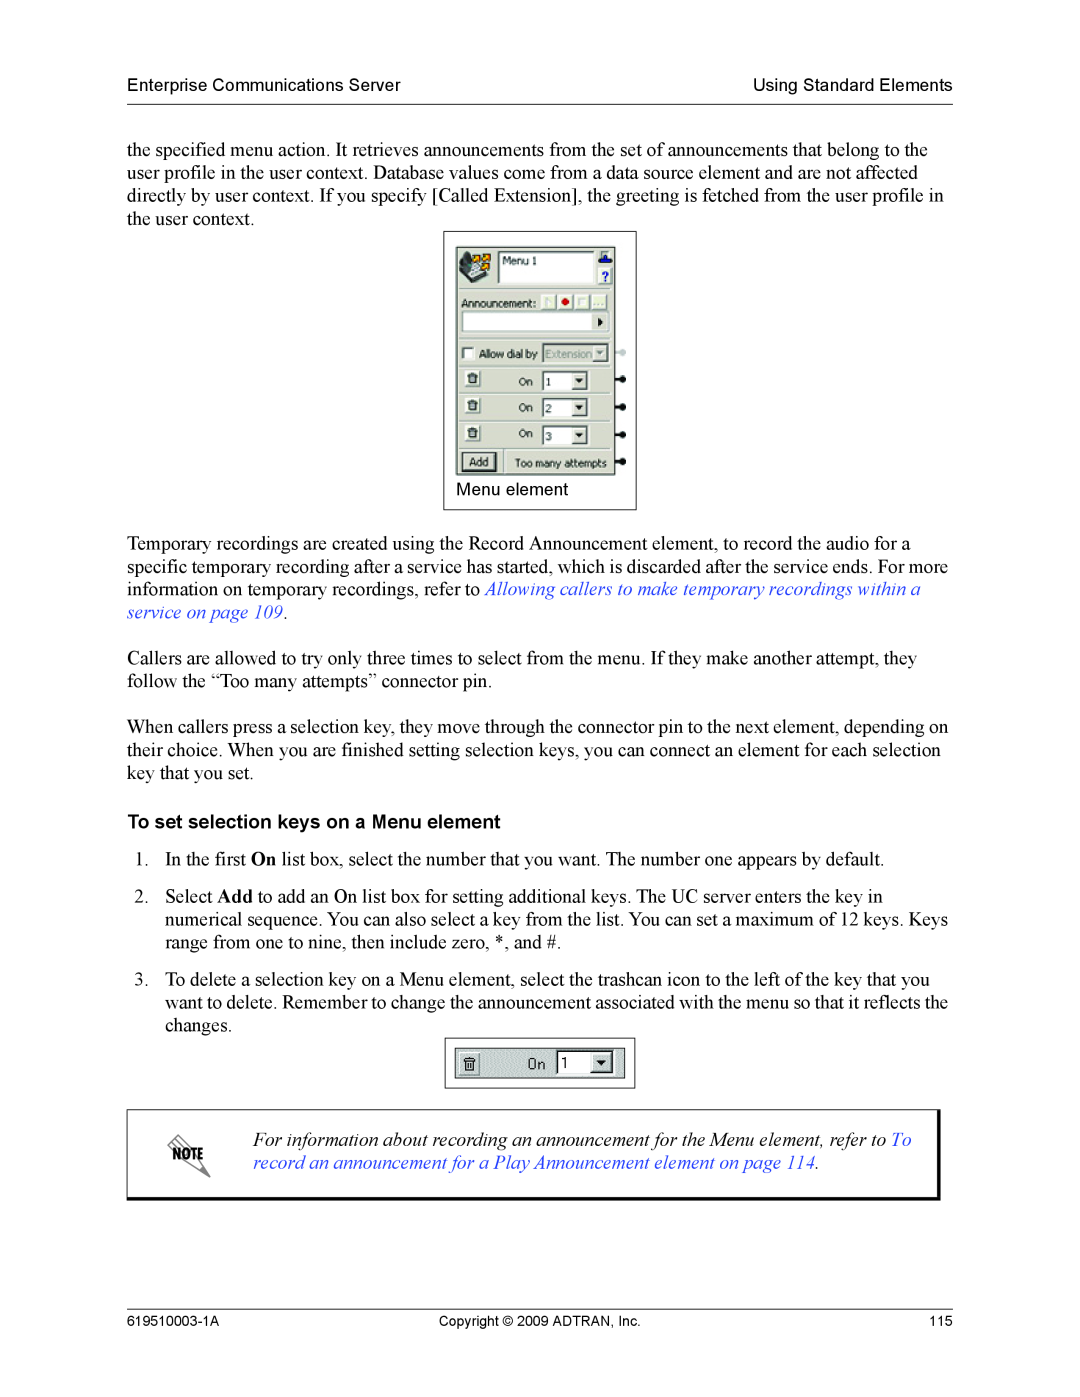 ADTRAN 619510003-1A manual To set selection keys on a Menu element 